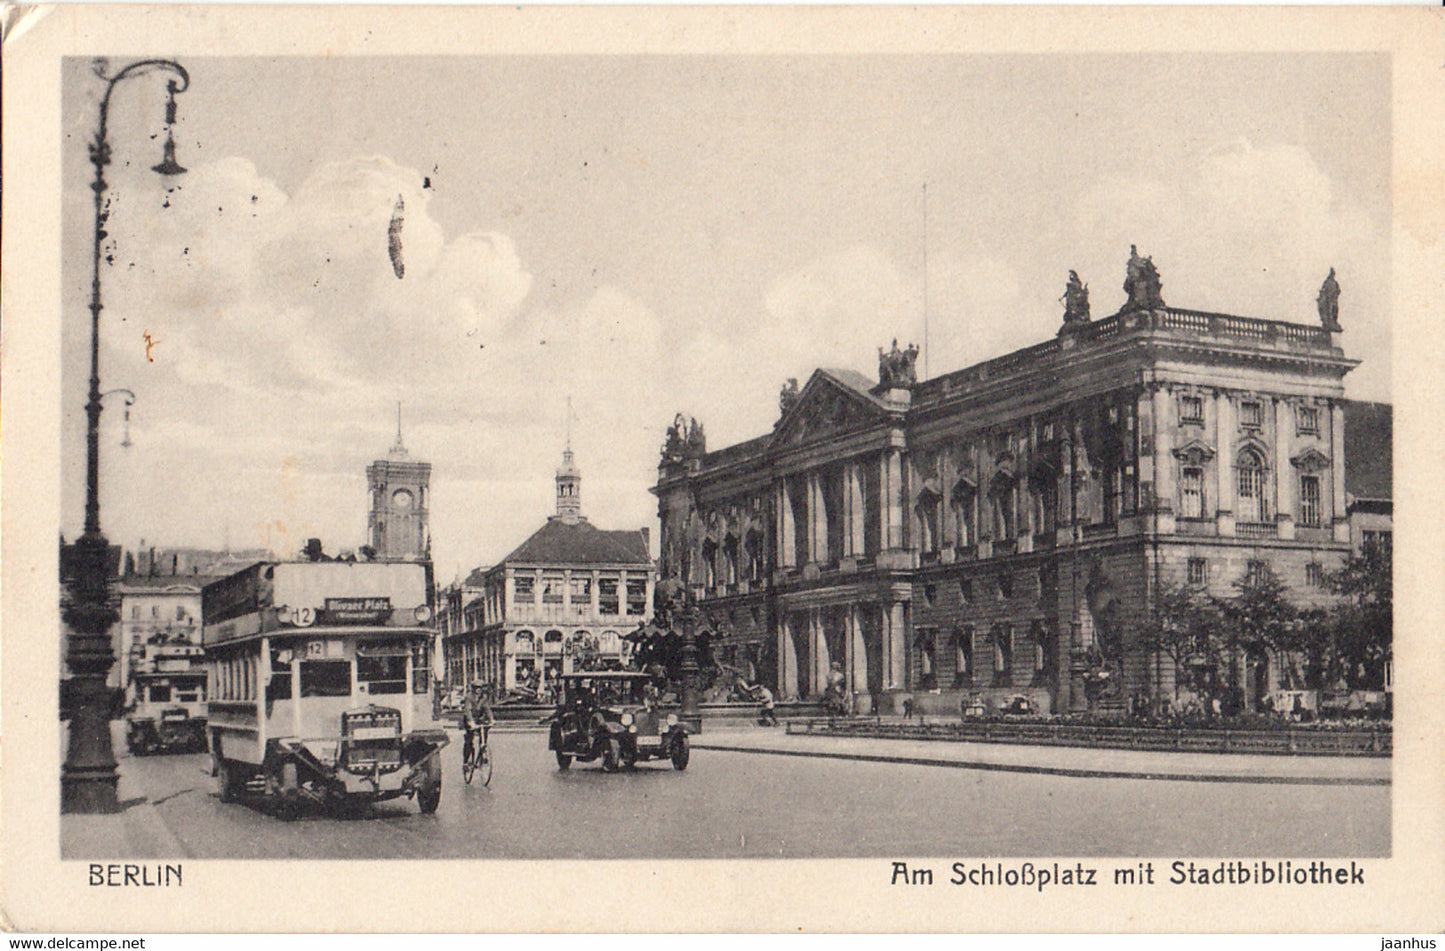 Berlin - Am Schlossplatz mit Stadtbibliothek - library - old car - bus - old postcard - 1930 - Germany - used - JH Postcards